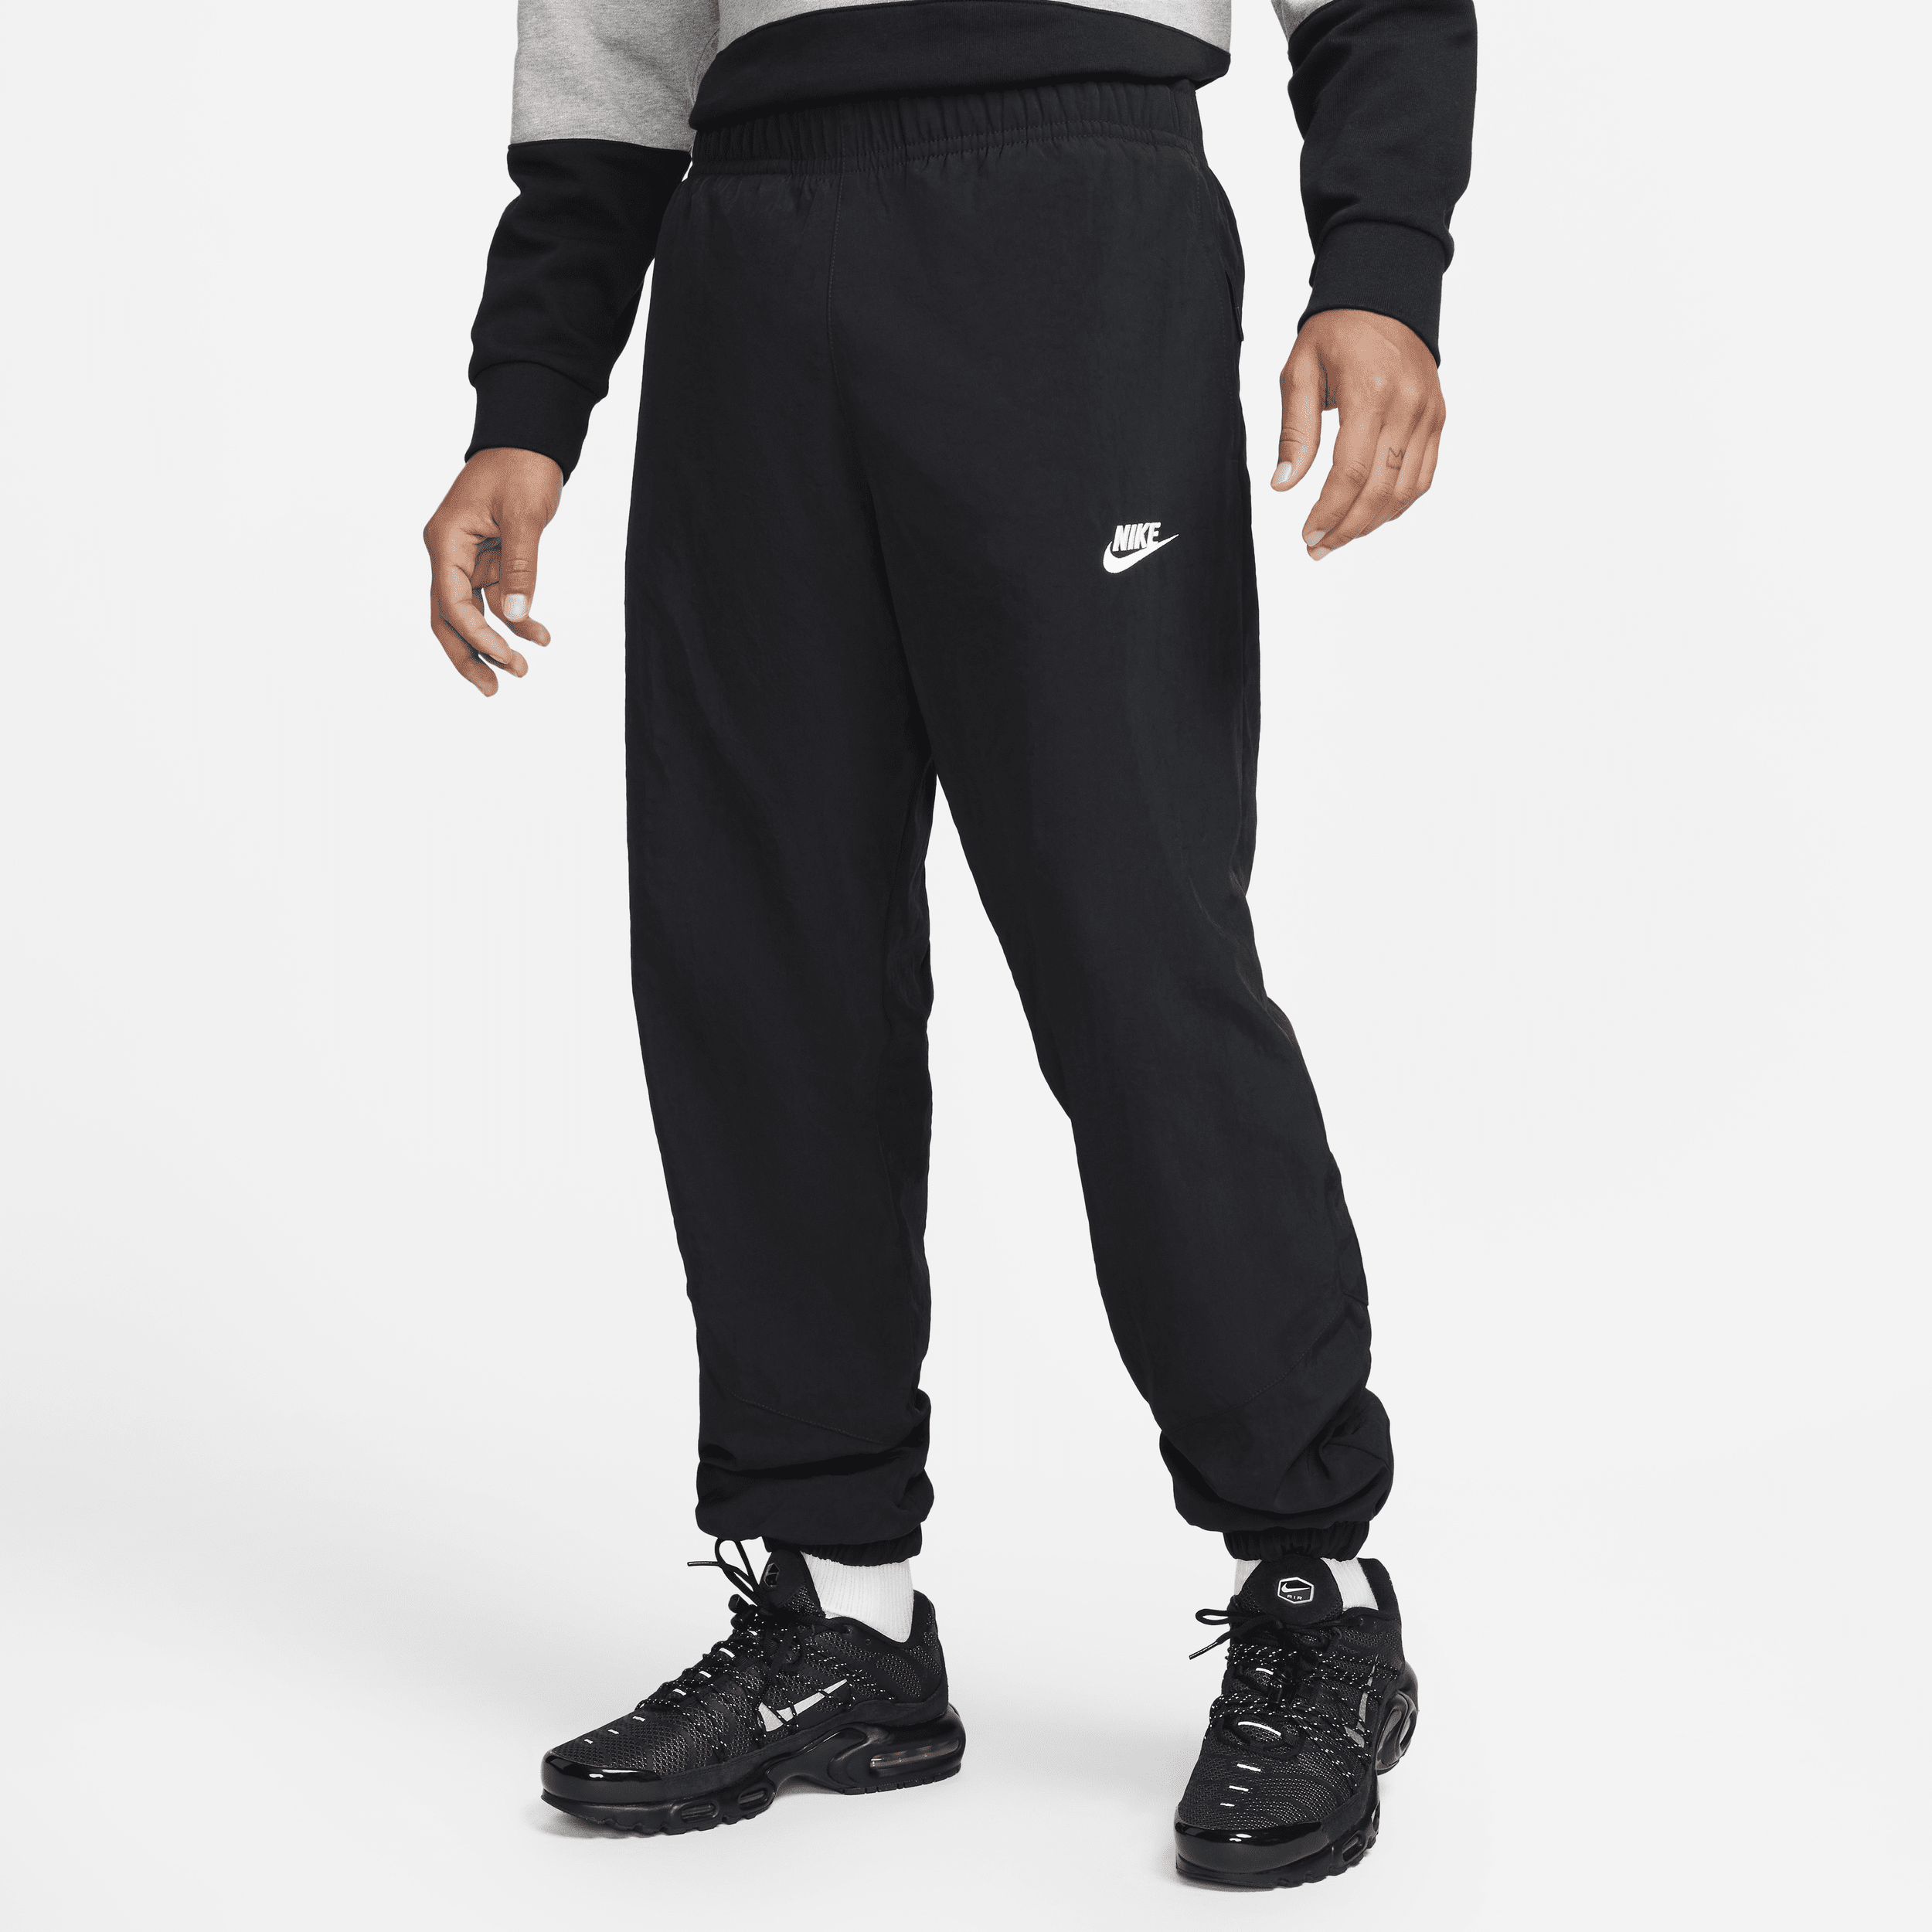 Pantaloni in tessuto per l'inverno Nike Windrunner – Uomo - Nero